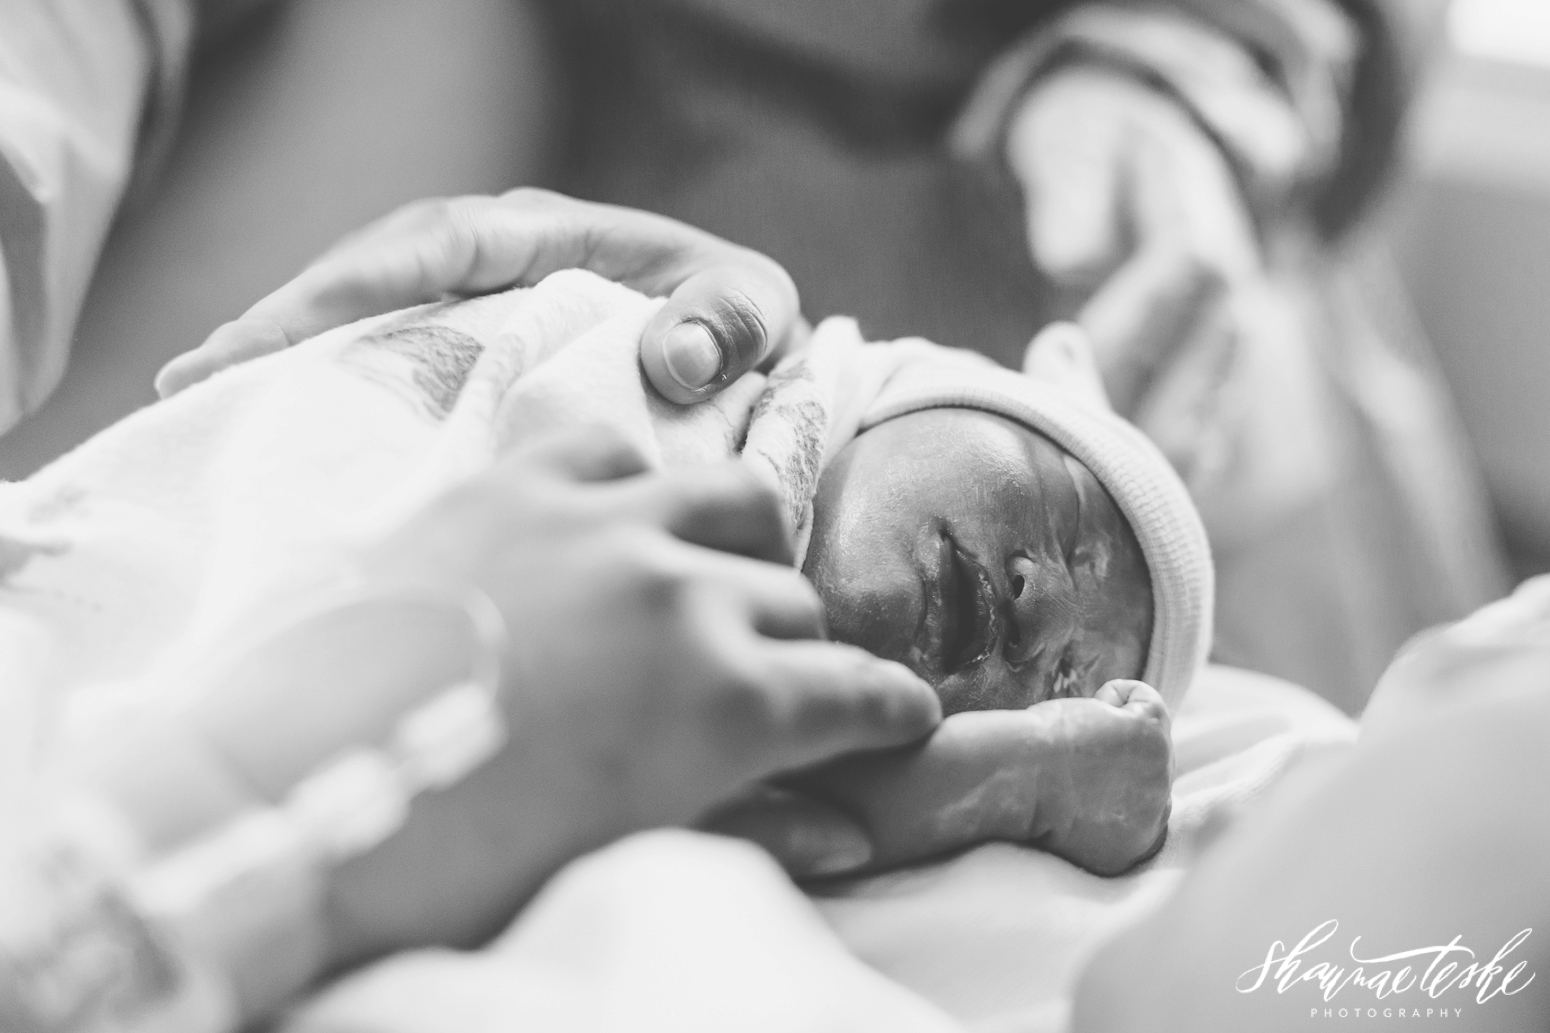 shaunae_teske_wisconsin_photographer_birth-story-stanley-walter-newborn-61